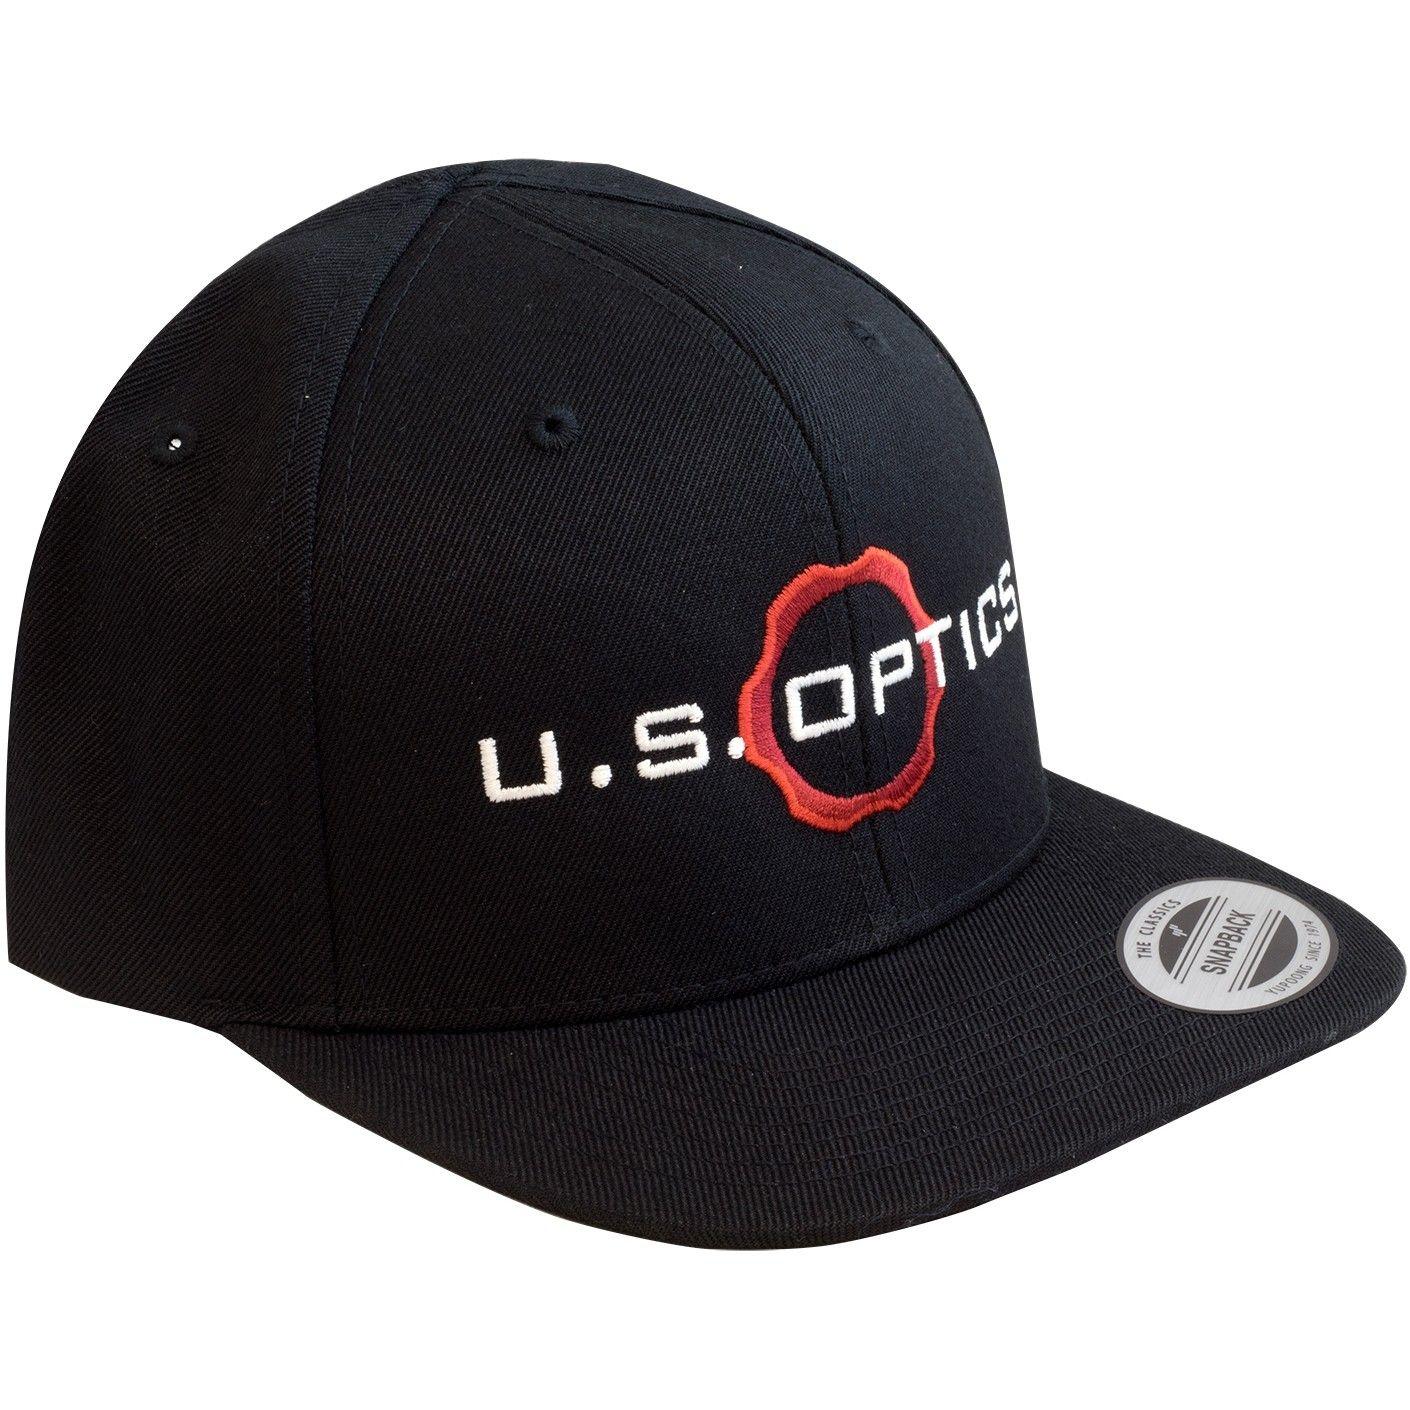 US Optics Logo - Buy U.S. Optics Classic Logo Snapbacks at SWFA.com